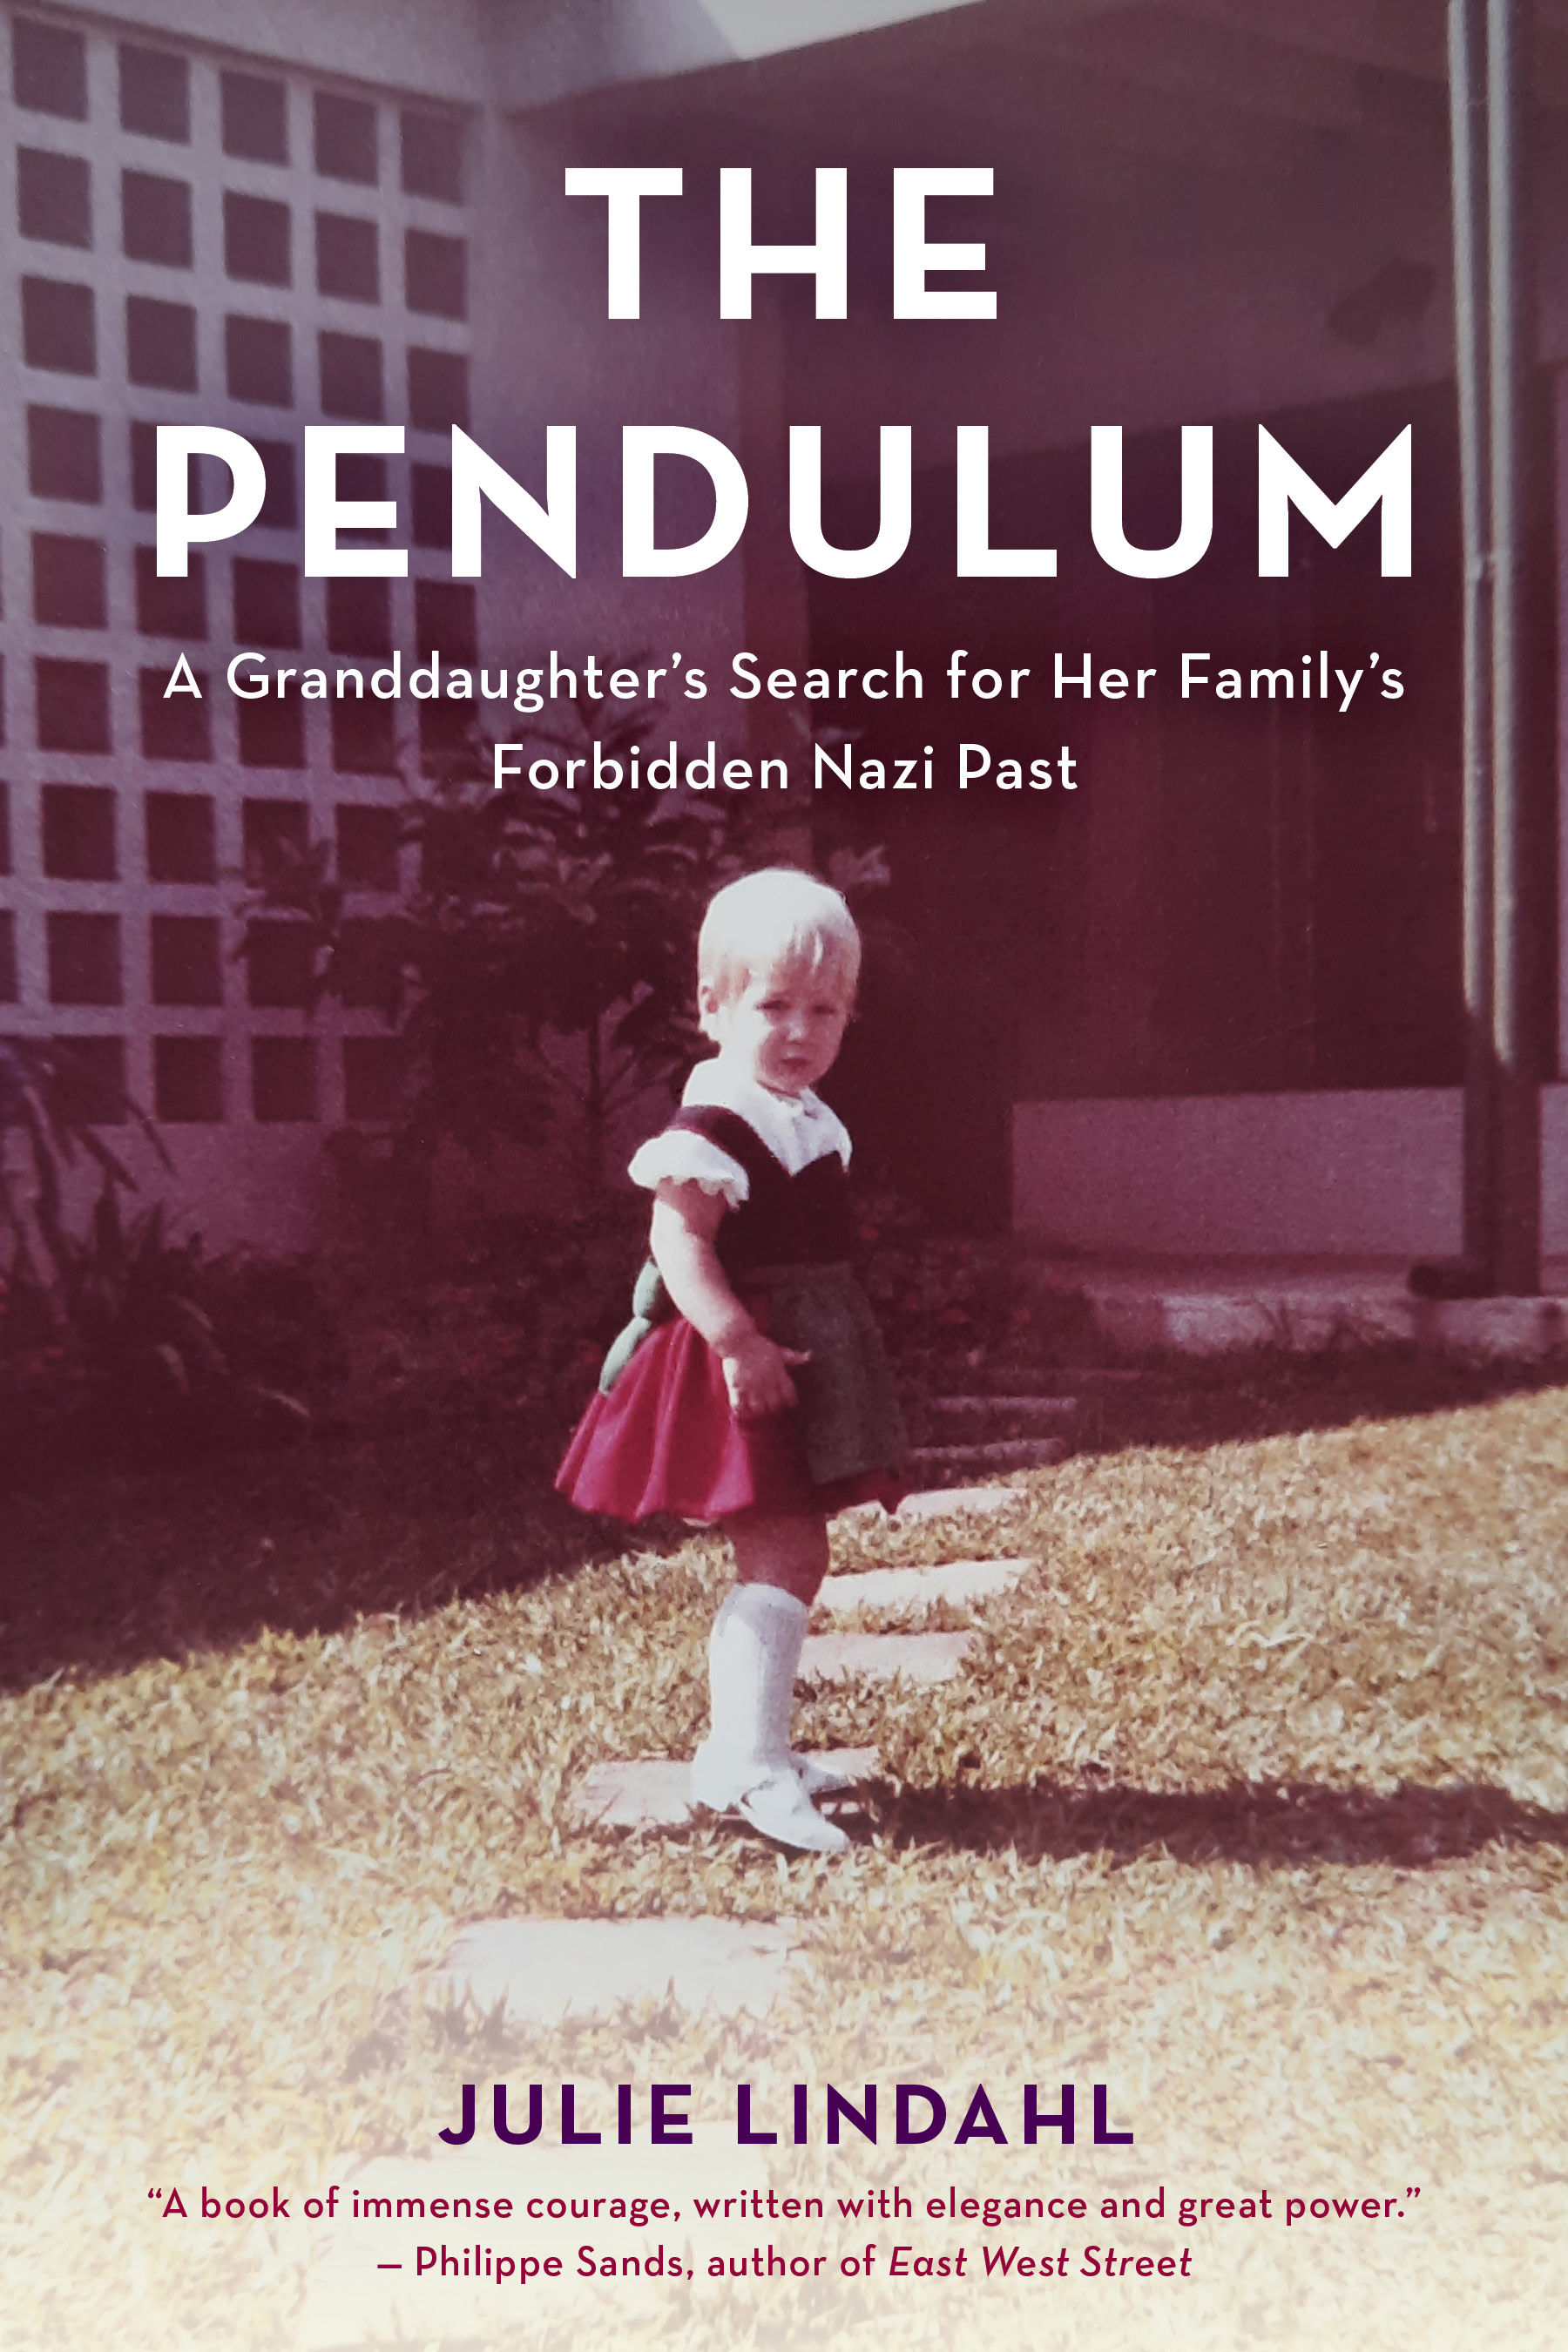 The Pendulum by Julie Lindahl